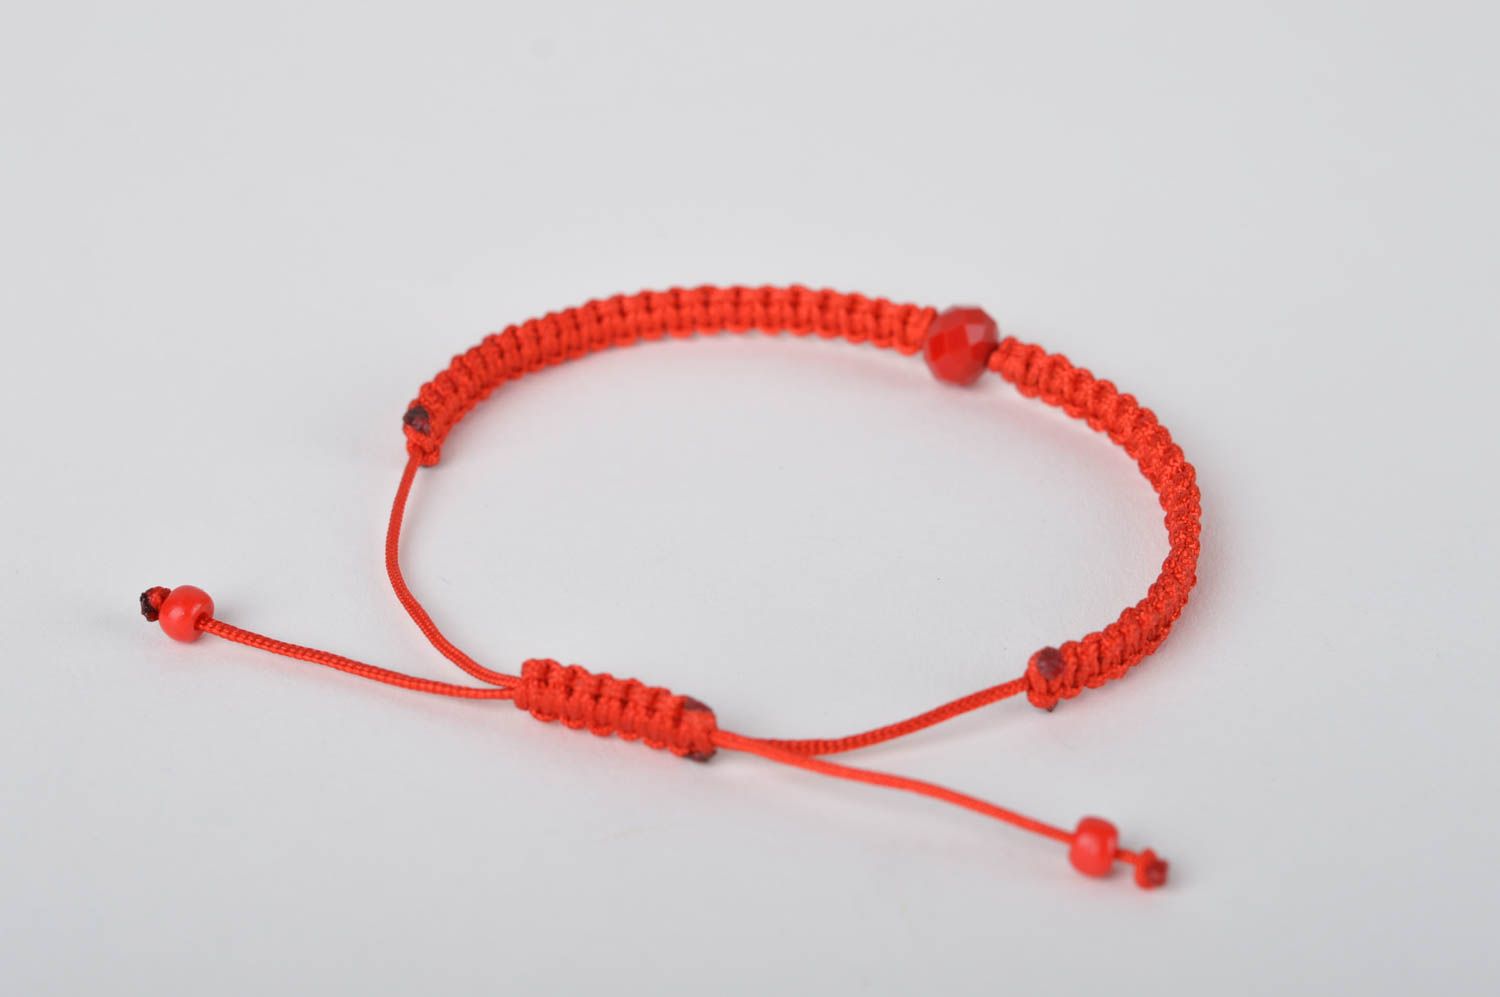 Stylish handmade textile bracelet wrist bracelet designs fashion tips for her photo 3